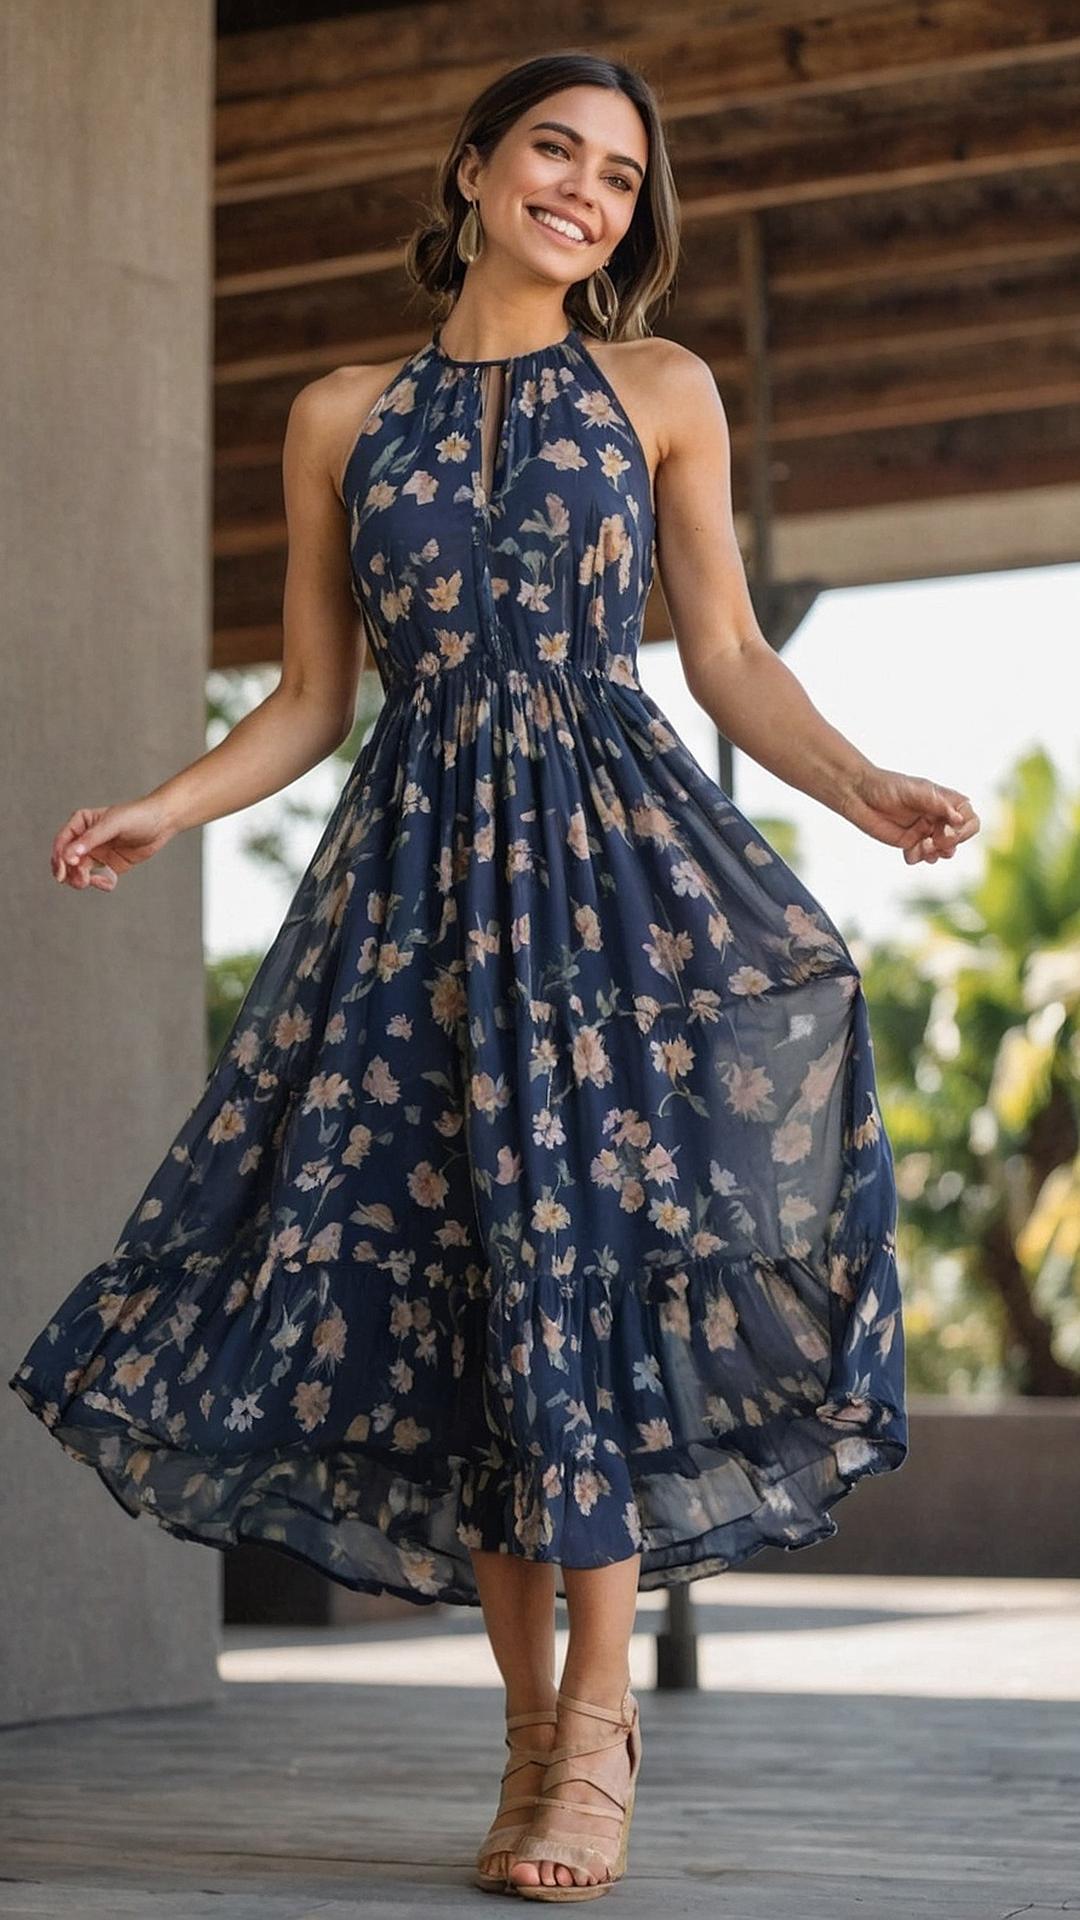 Garden Party Chic: Floral Maxi Dress Ideas